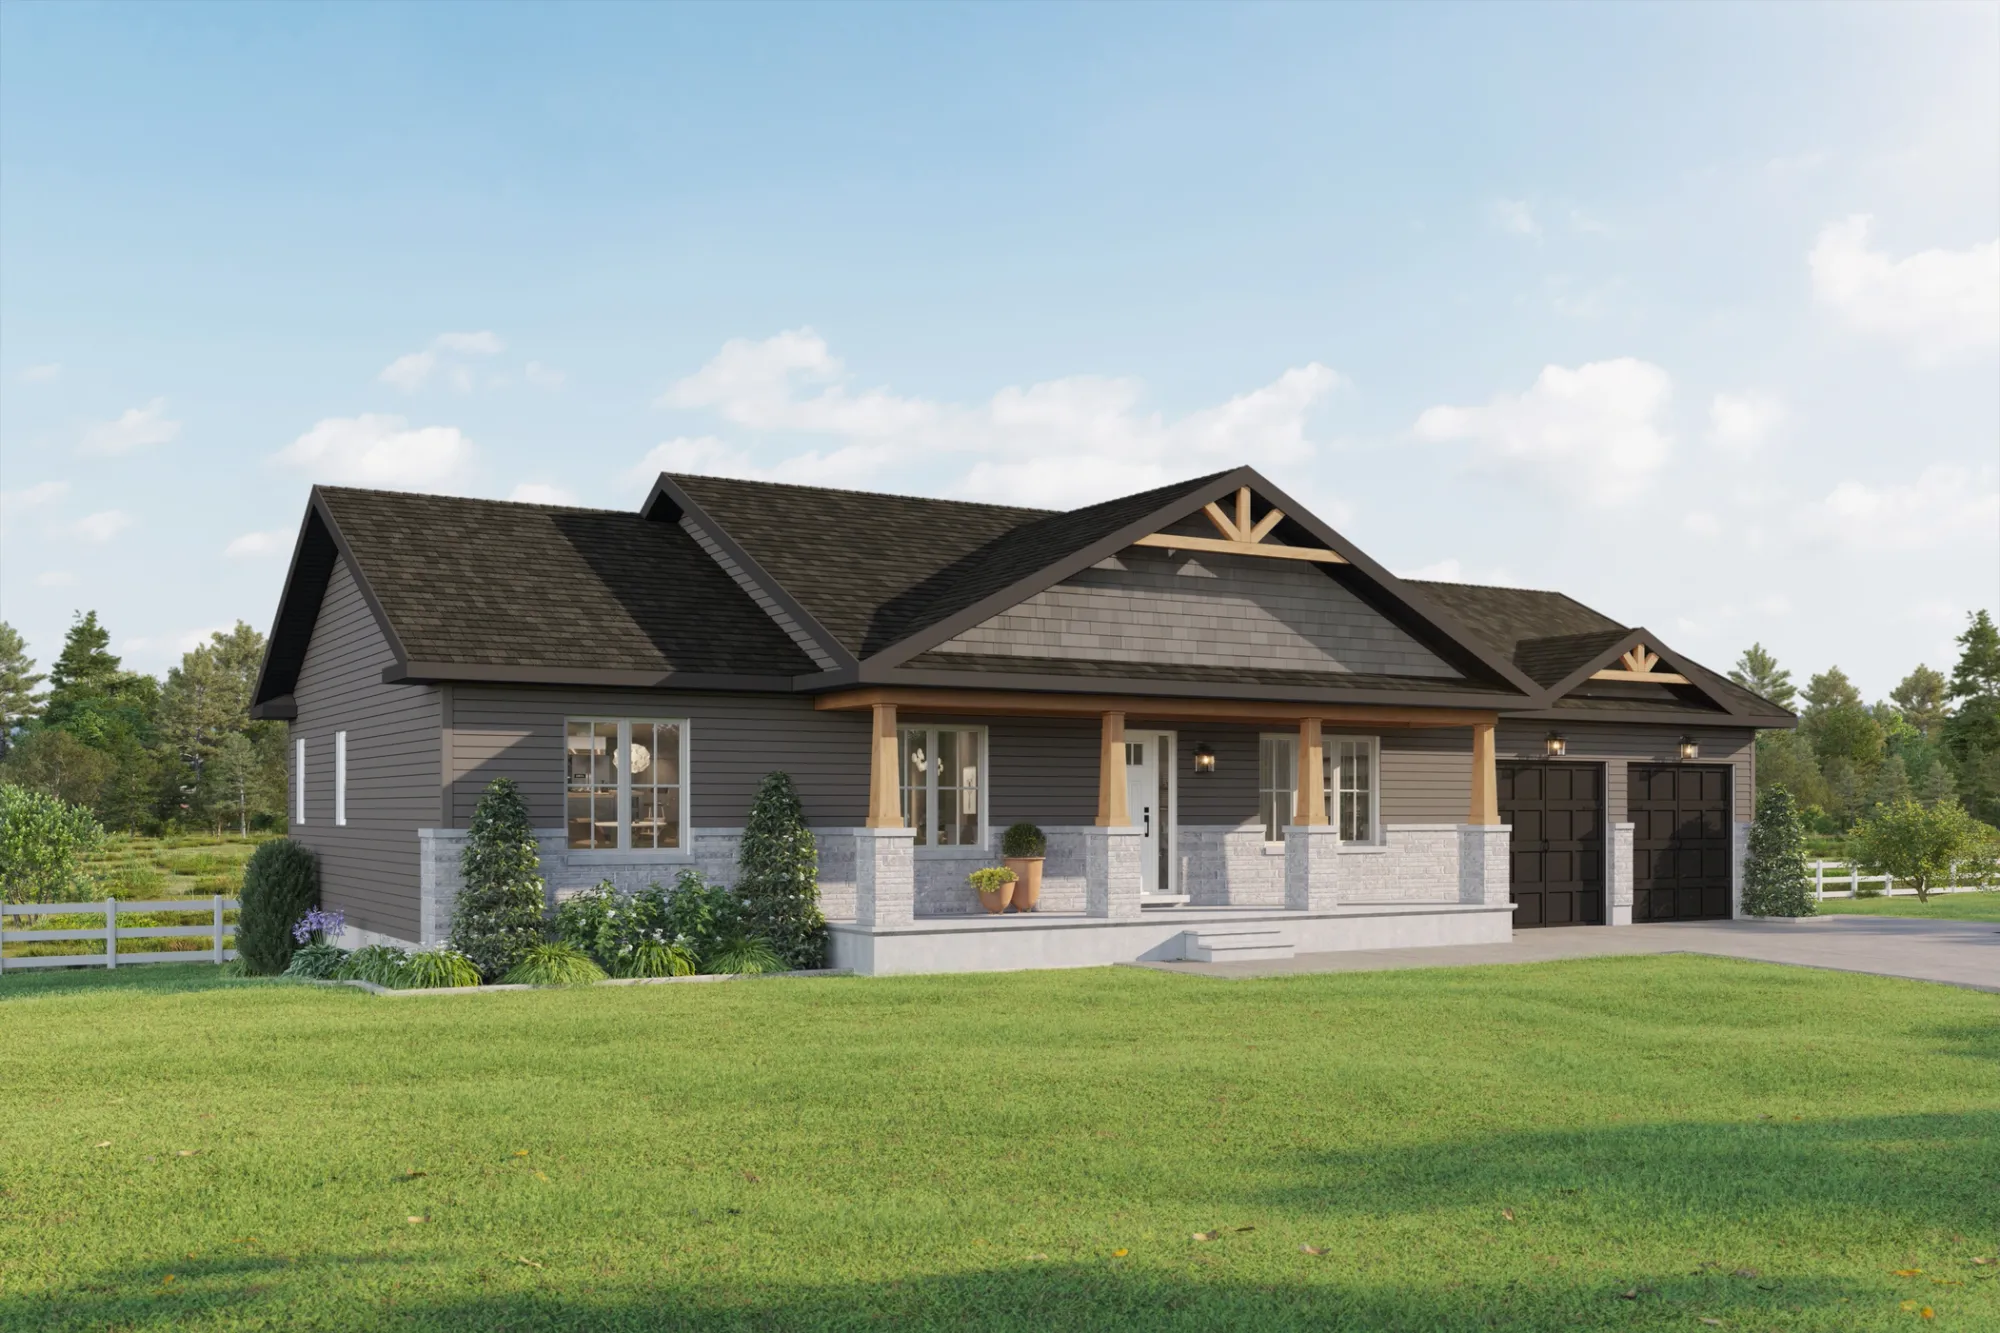 New bungalow for sale - Russell Ridge Estates, Marionville.